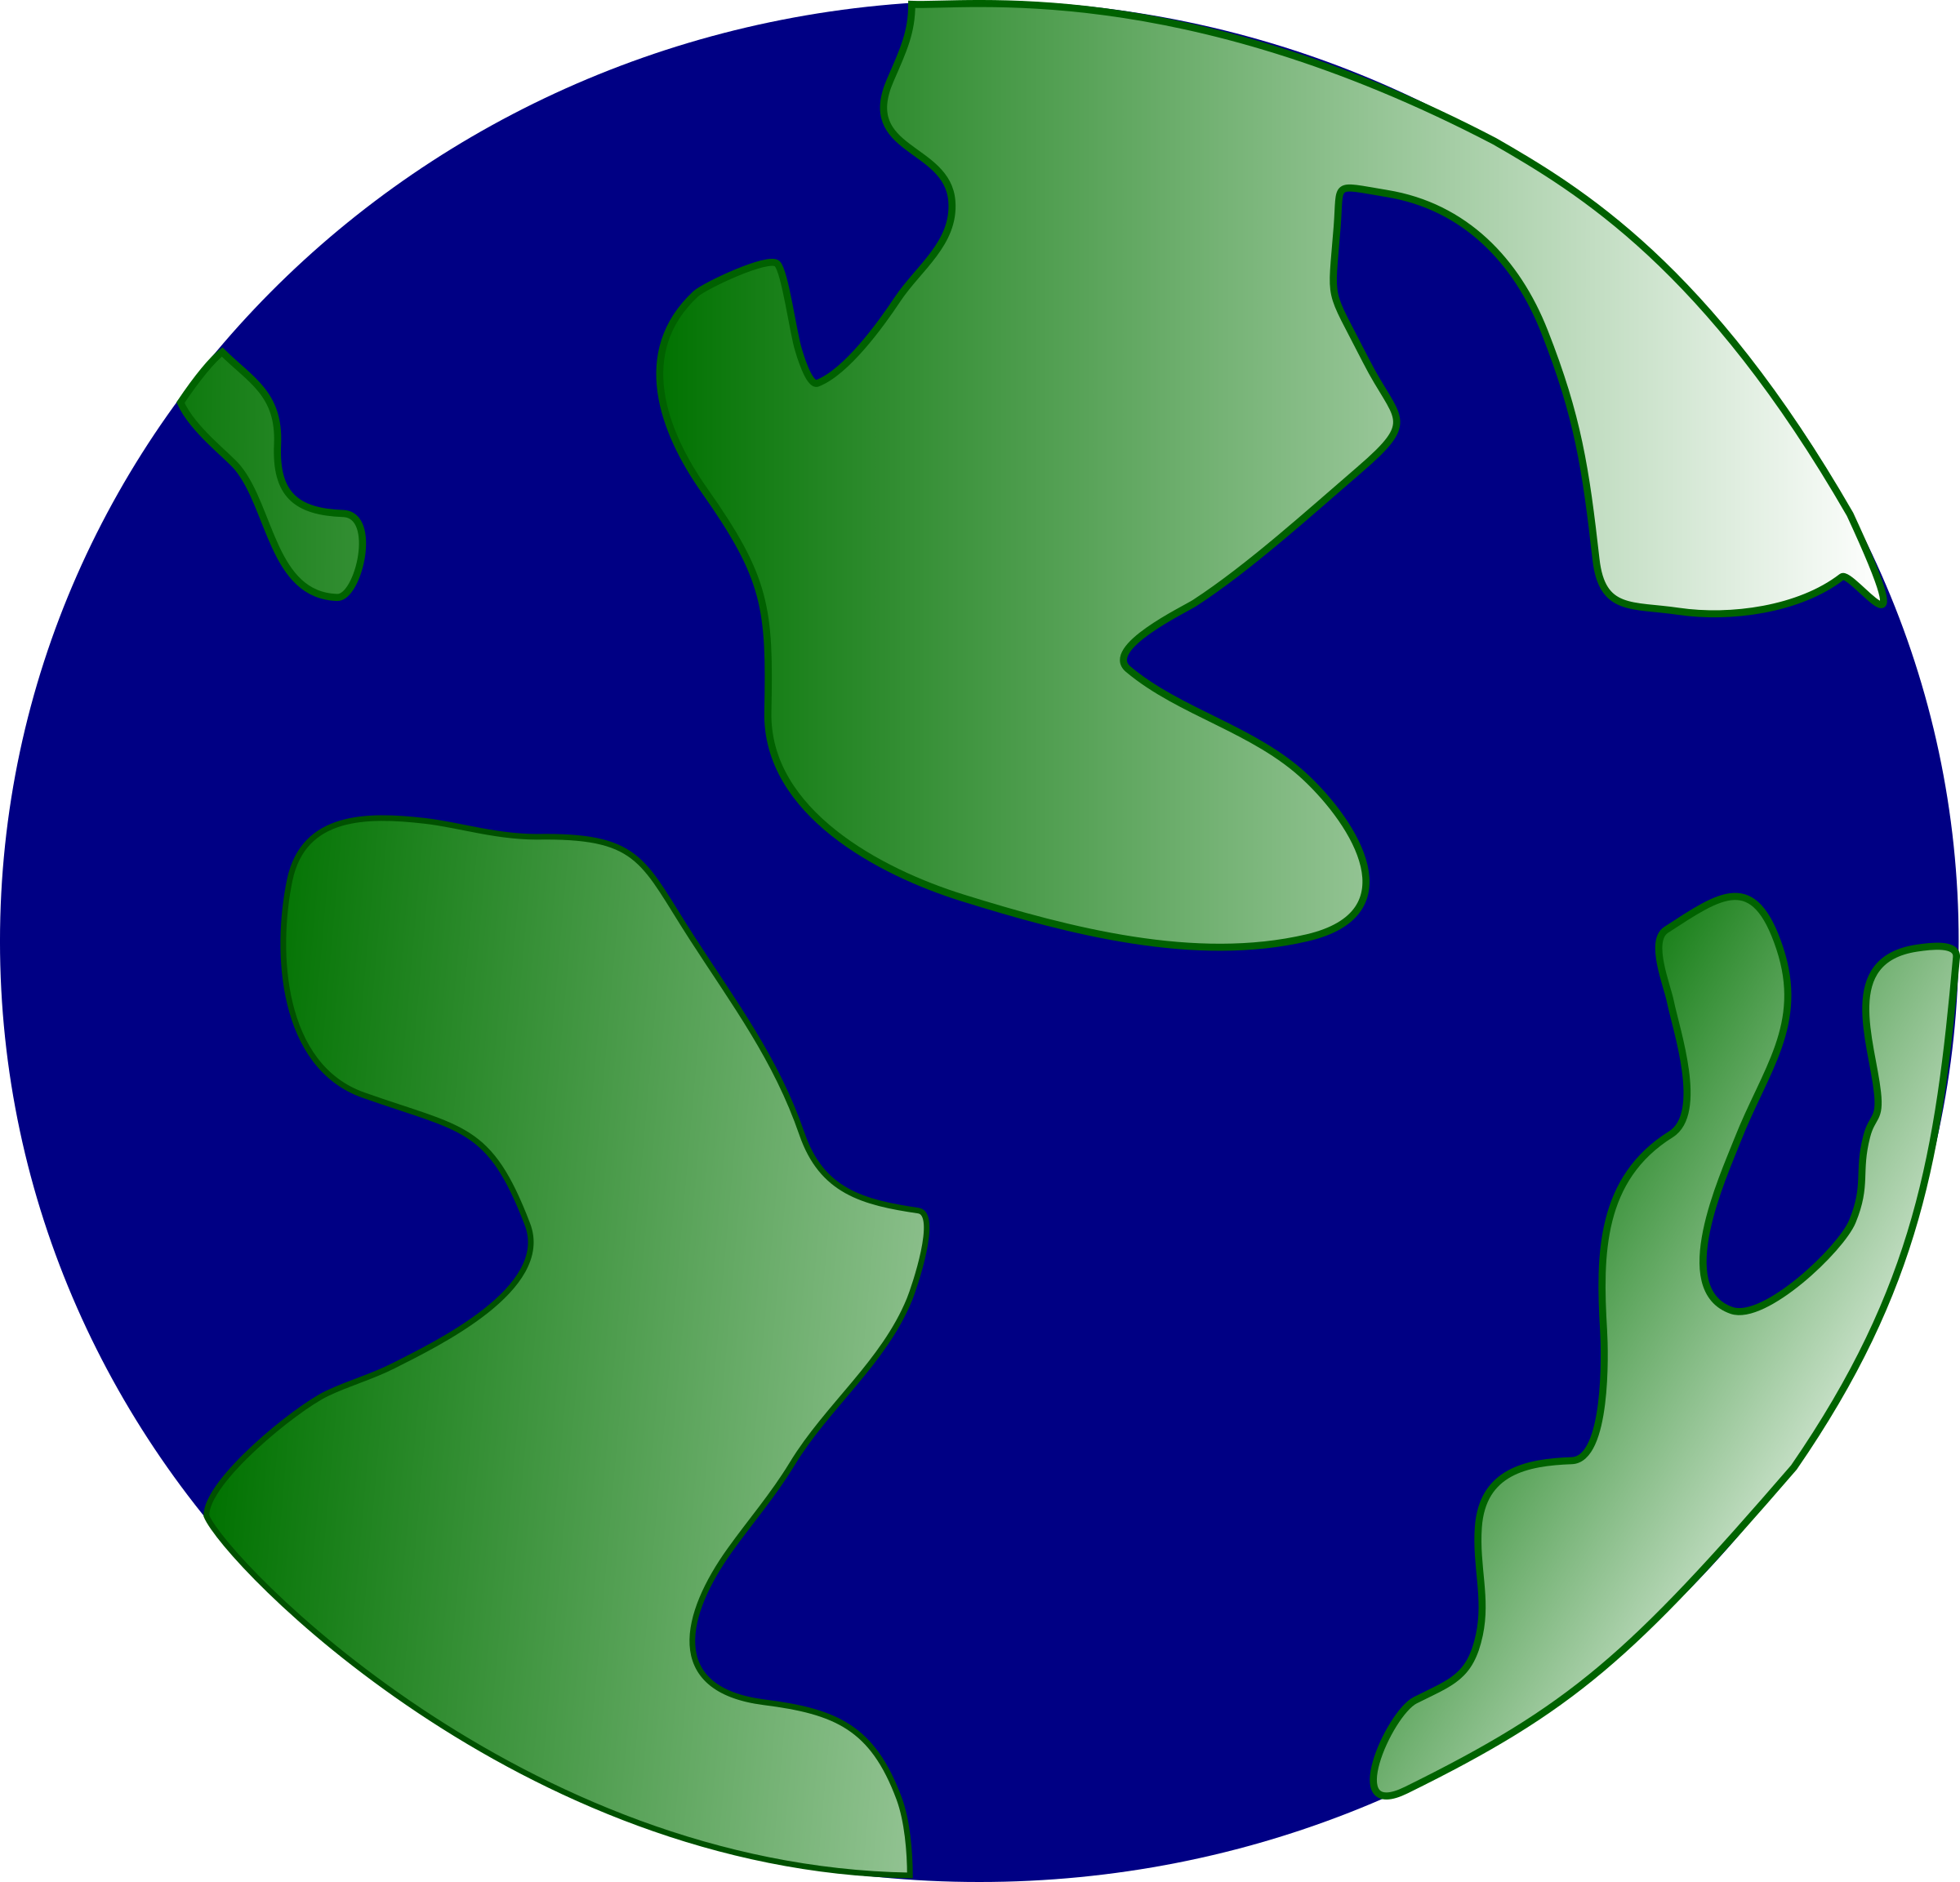 Pseudo globe big image. Geography clipart socail